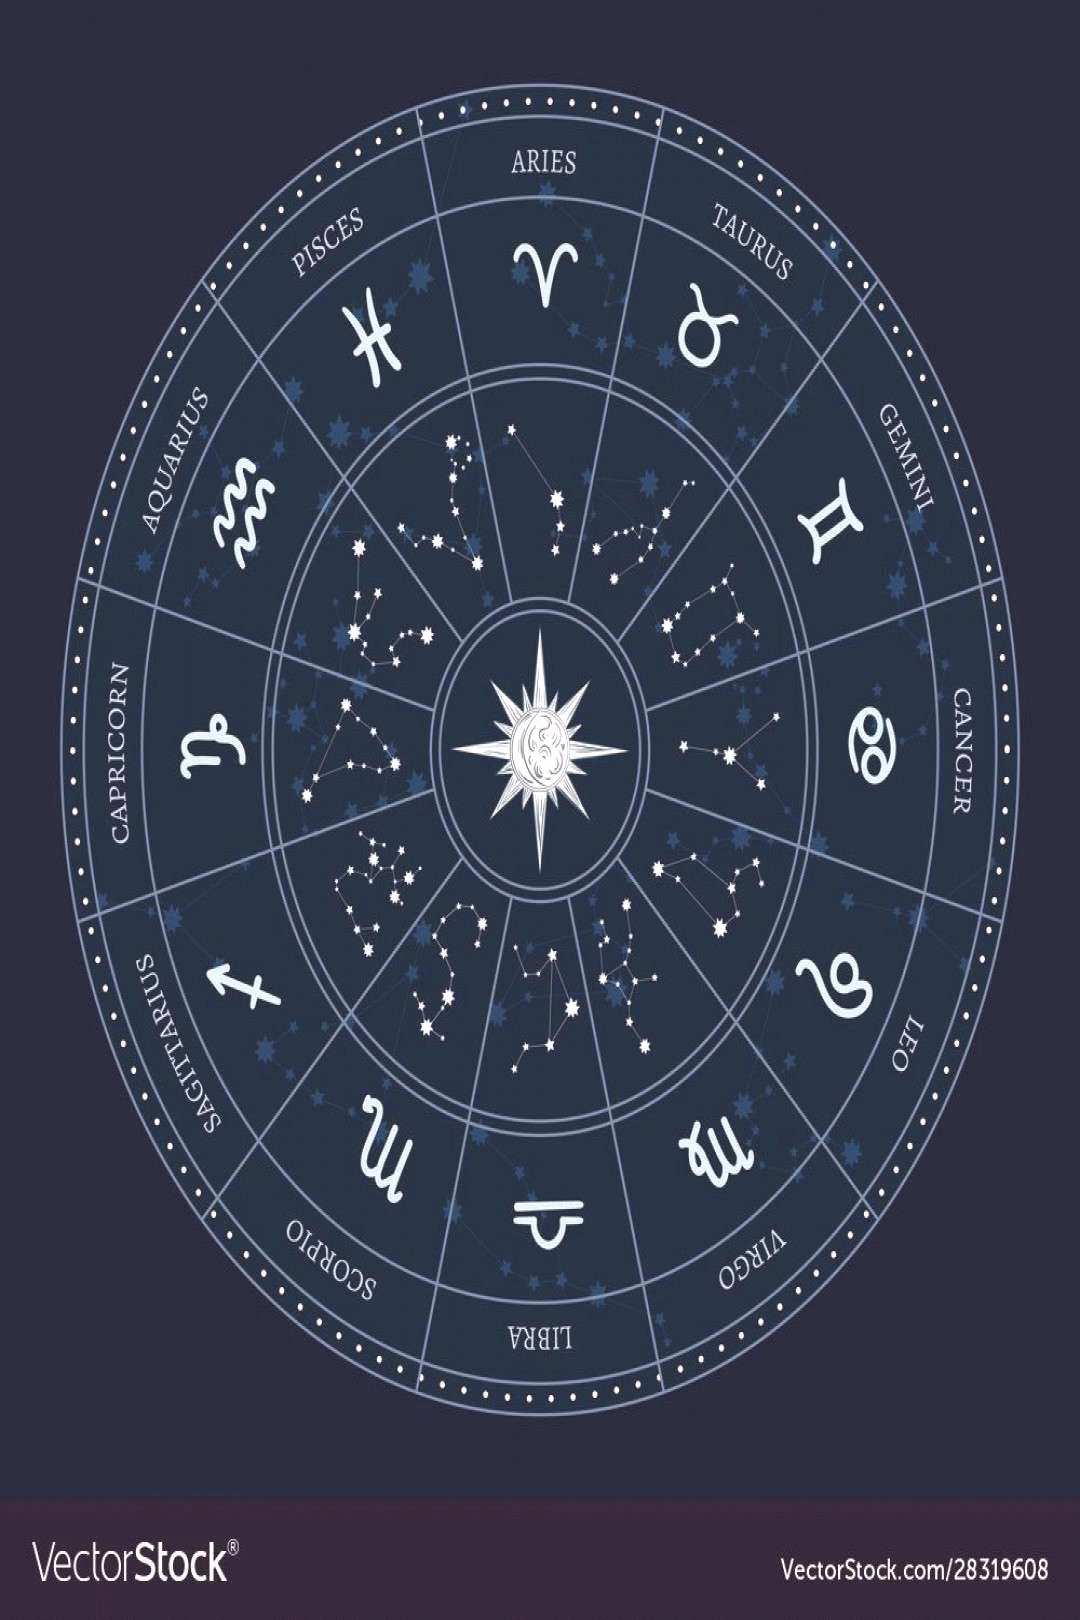 astrology zodiac signs circle horoscope wheel vector image small